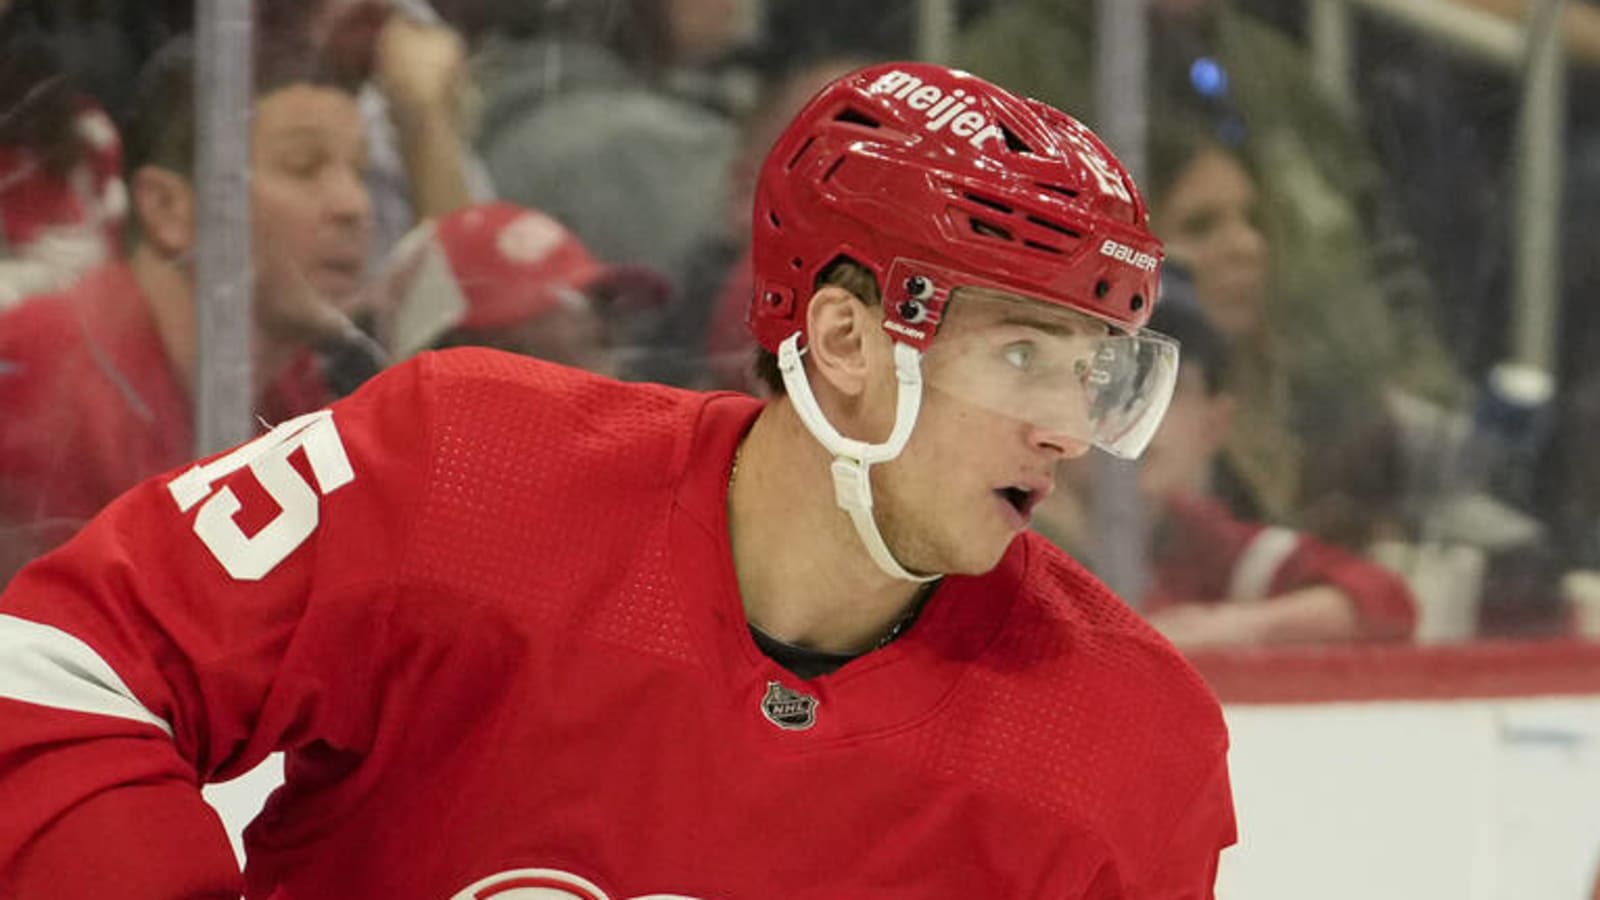 Jakub Vrana returns to Detroit Red Wings after entering NHL player  assistance program